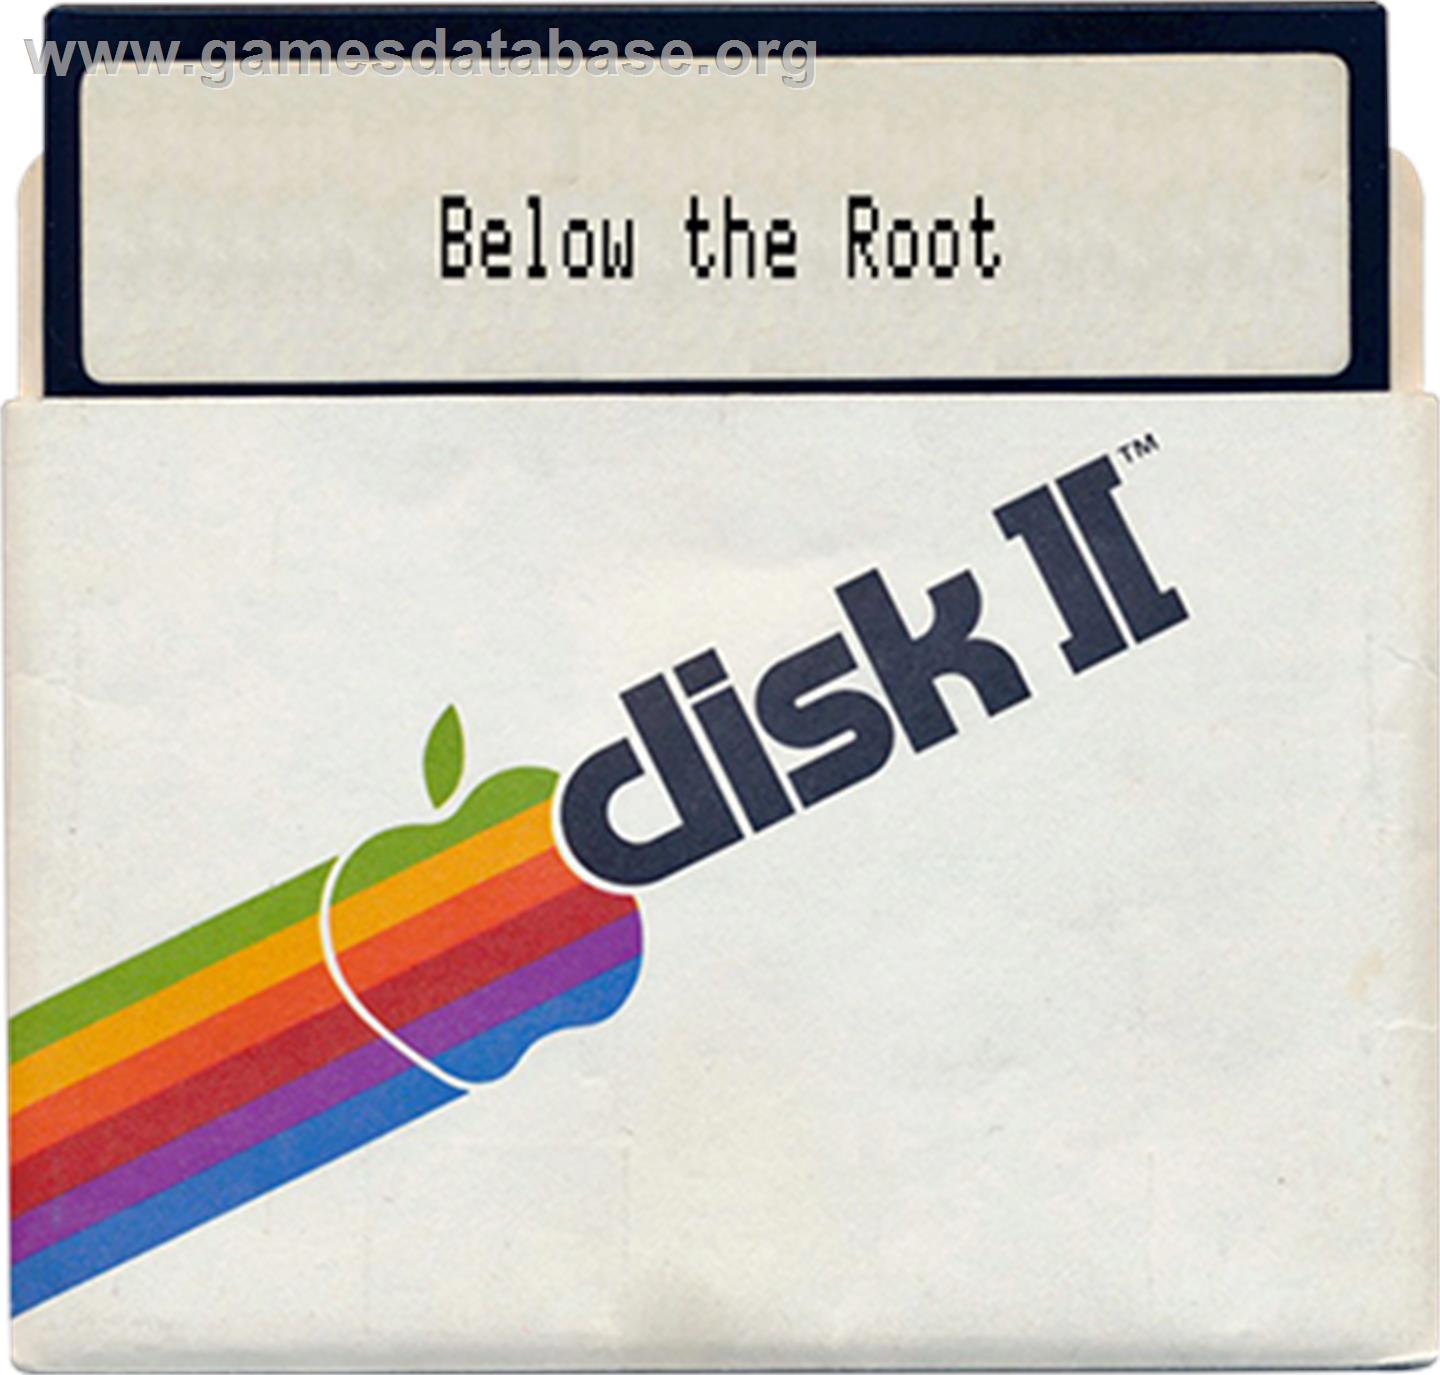 Below the Root - Apple II - Artwork - Disc